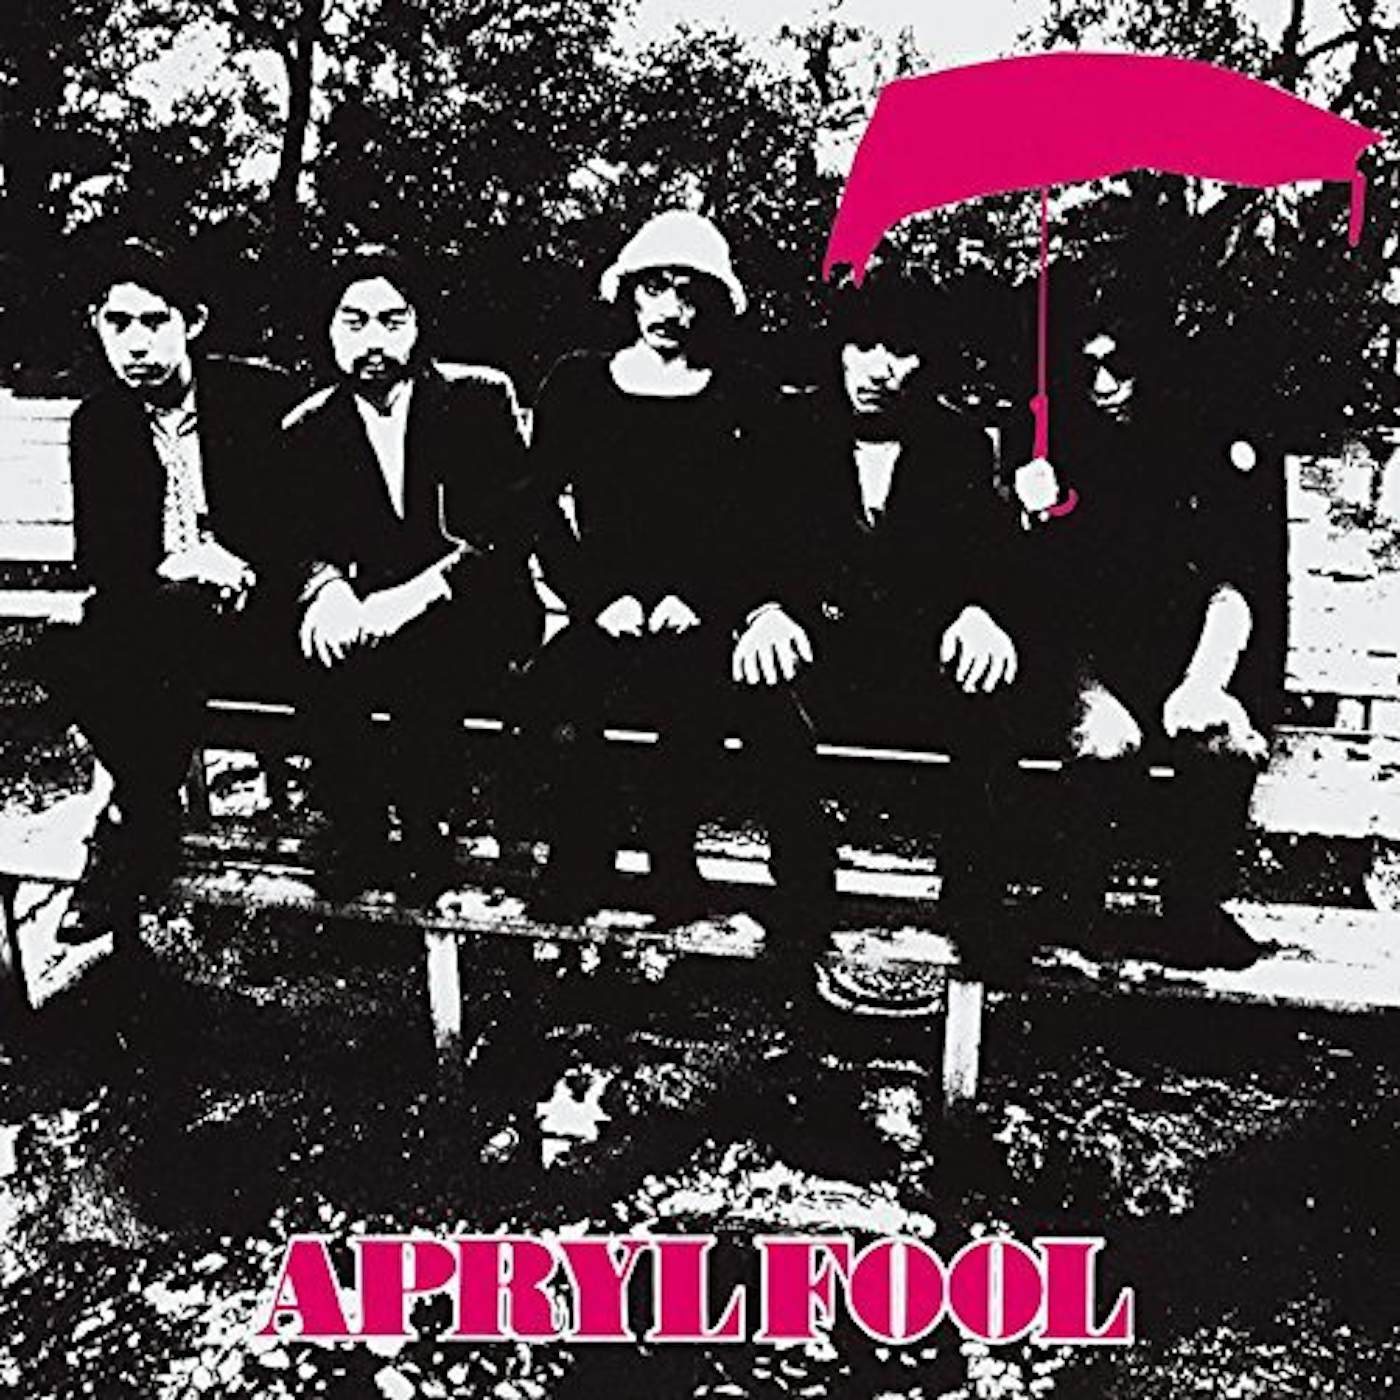 The Apryl Fool Vinyl Record